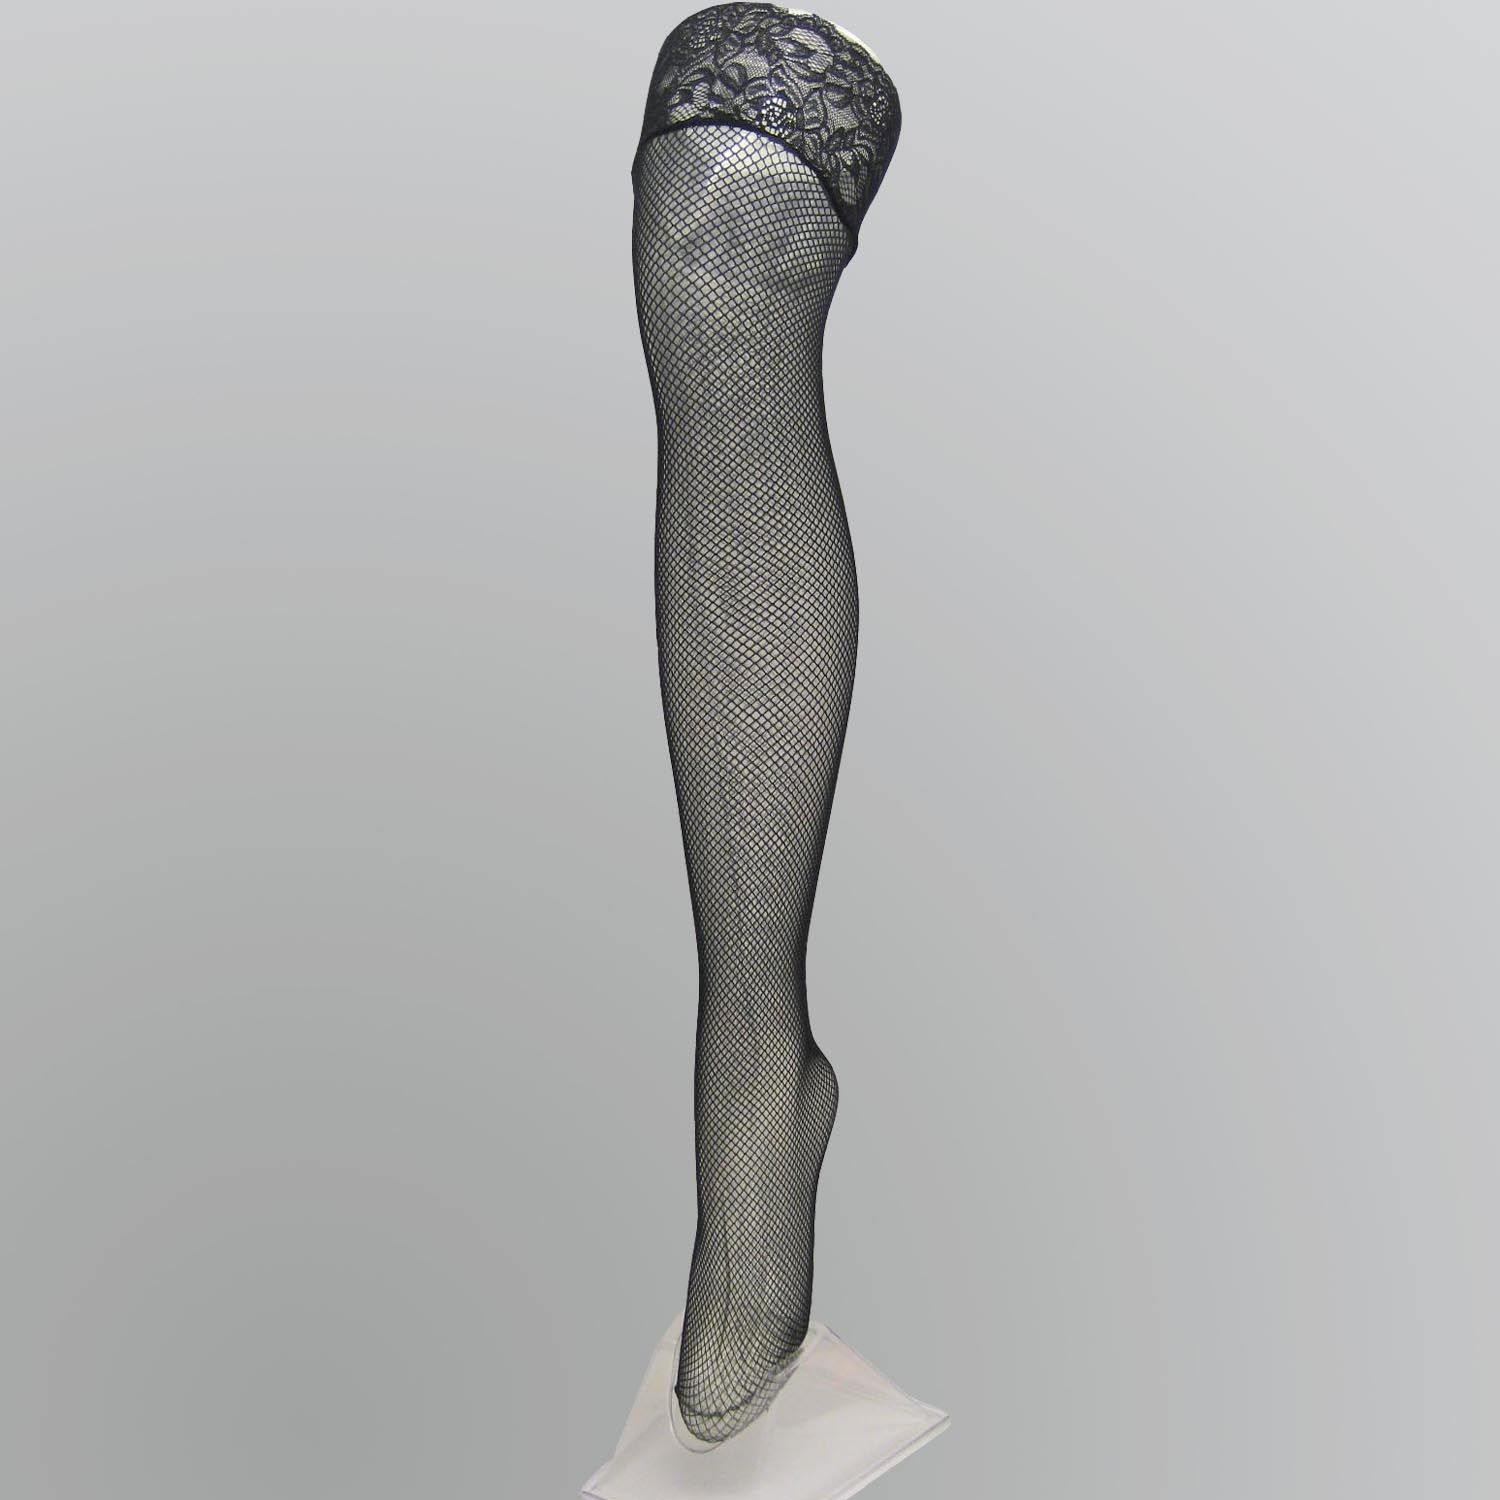 Sofia by Sofia Vergara Women's Hosiery Fishnet Thigh High One Size